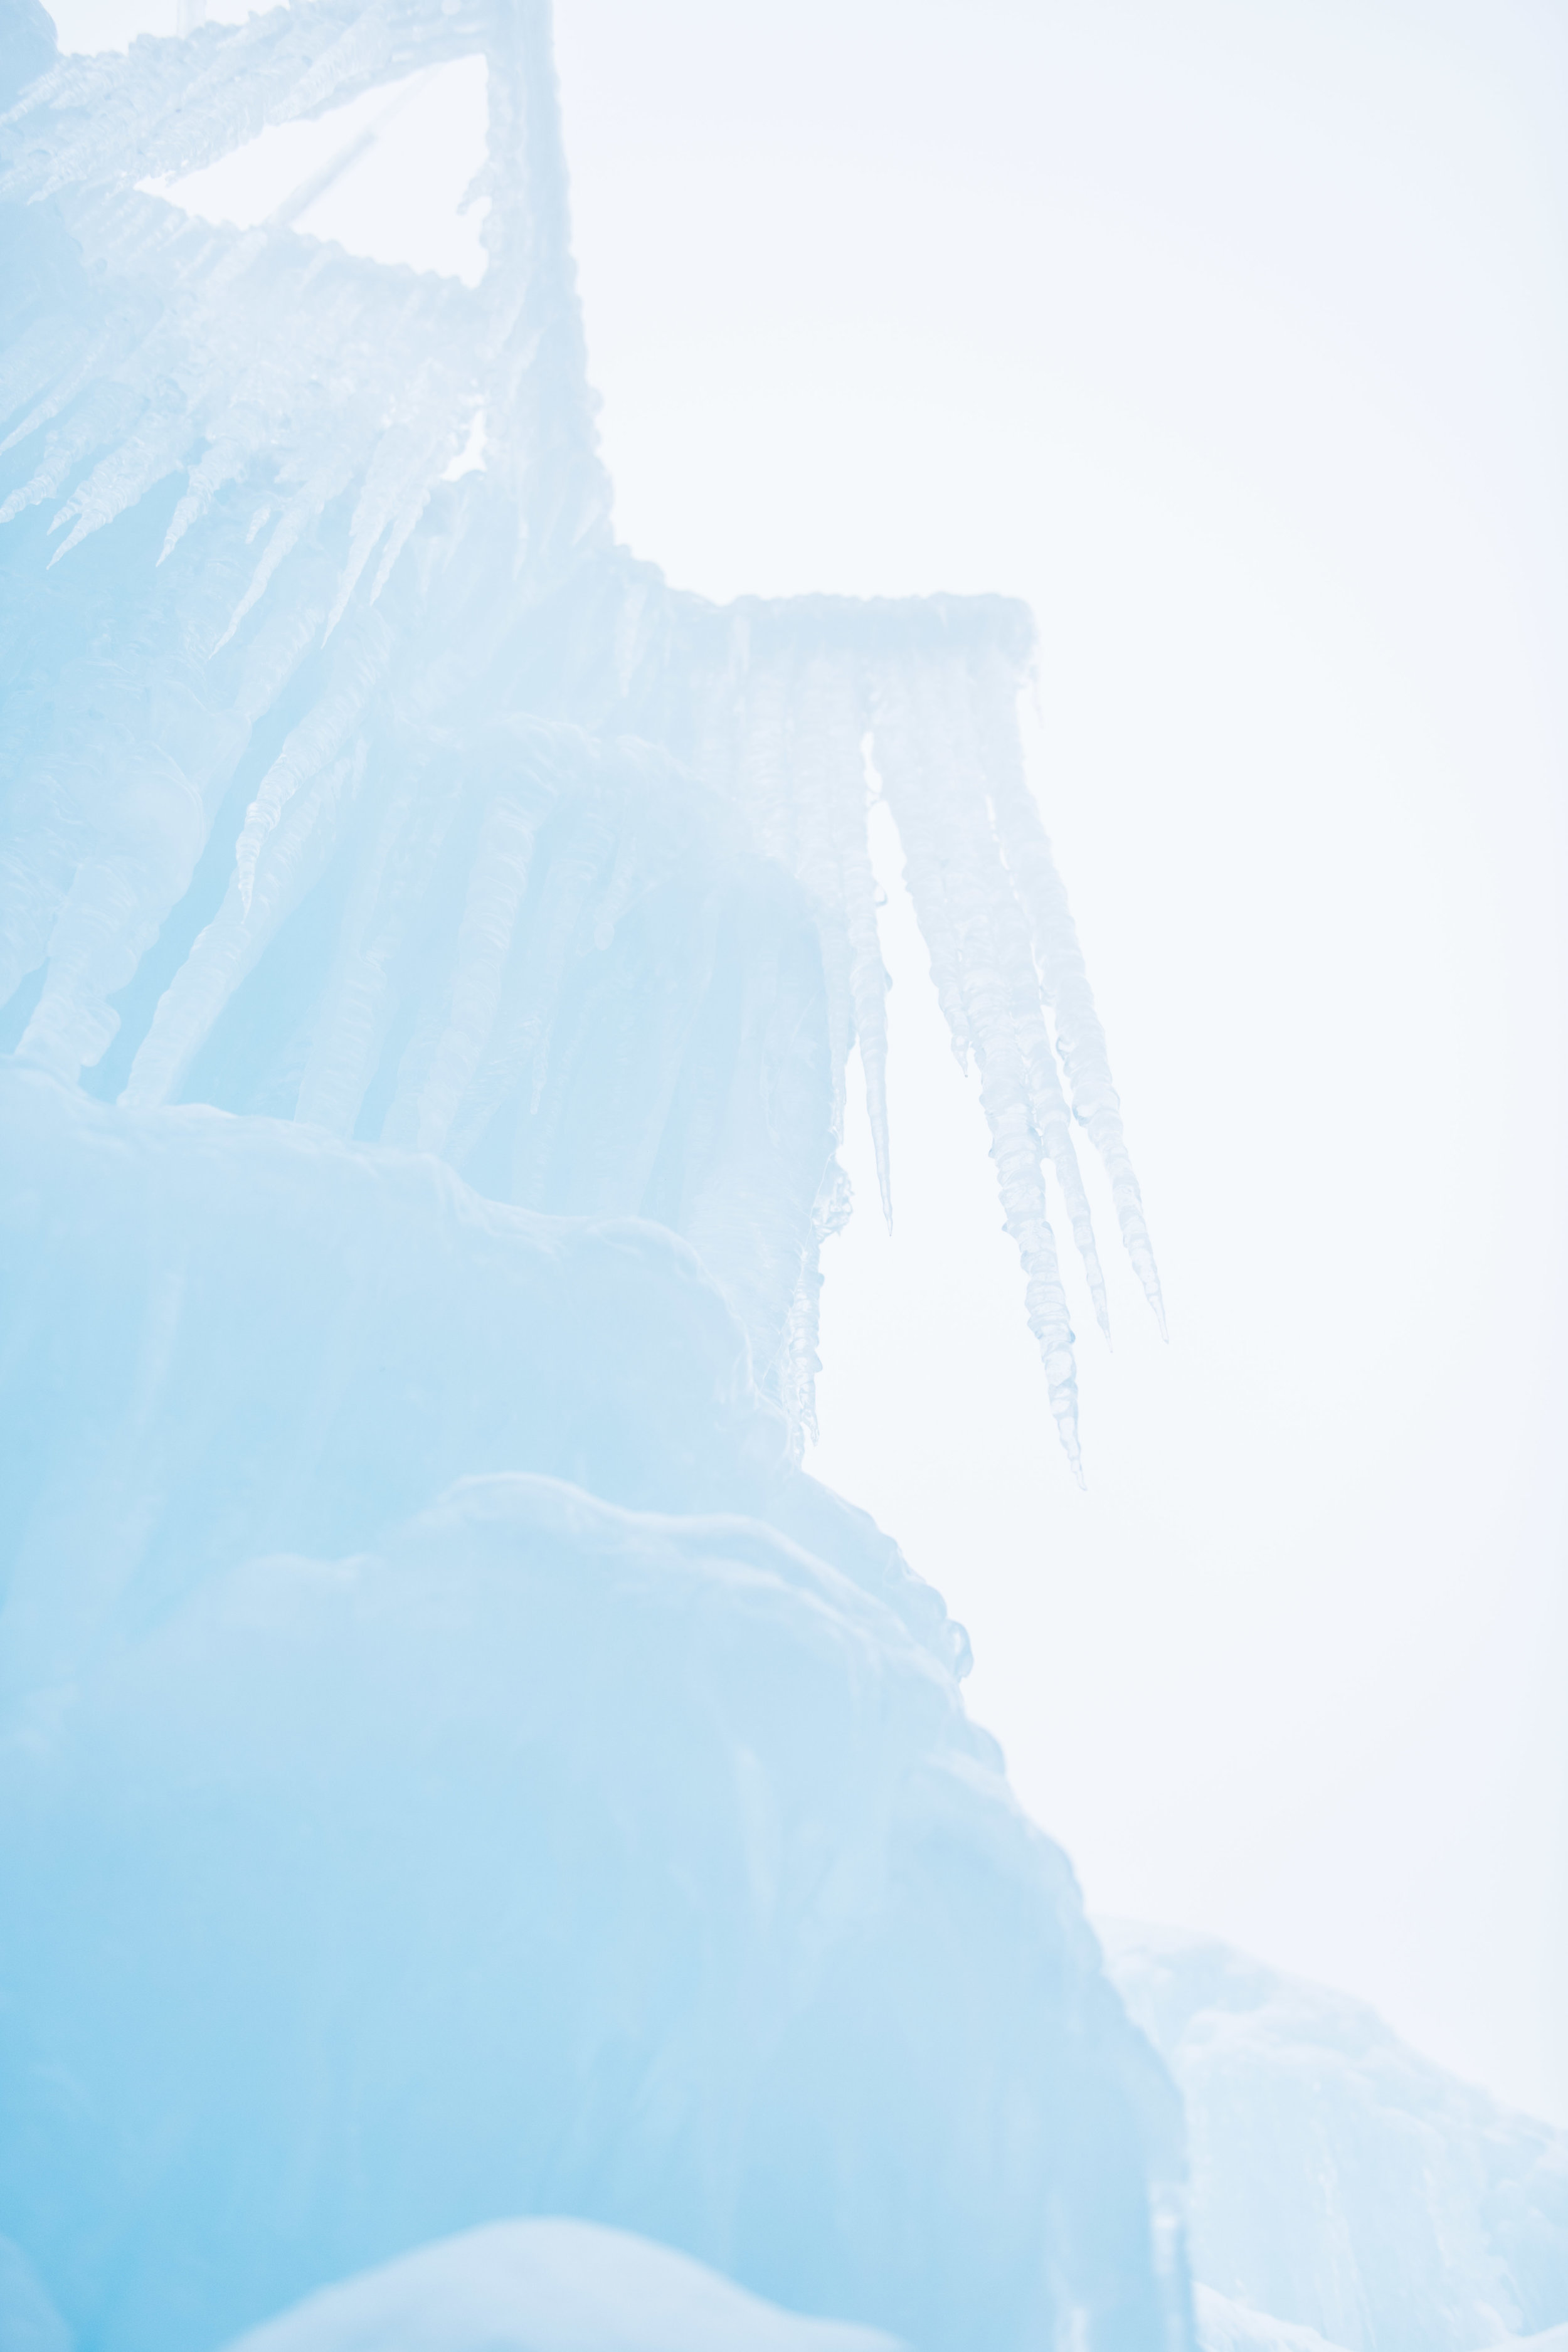 Ice Castles New Hampshire | Boston &amp; New England Adventure Landscape Travel Photography | Lorna Stell Photo